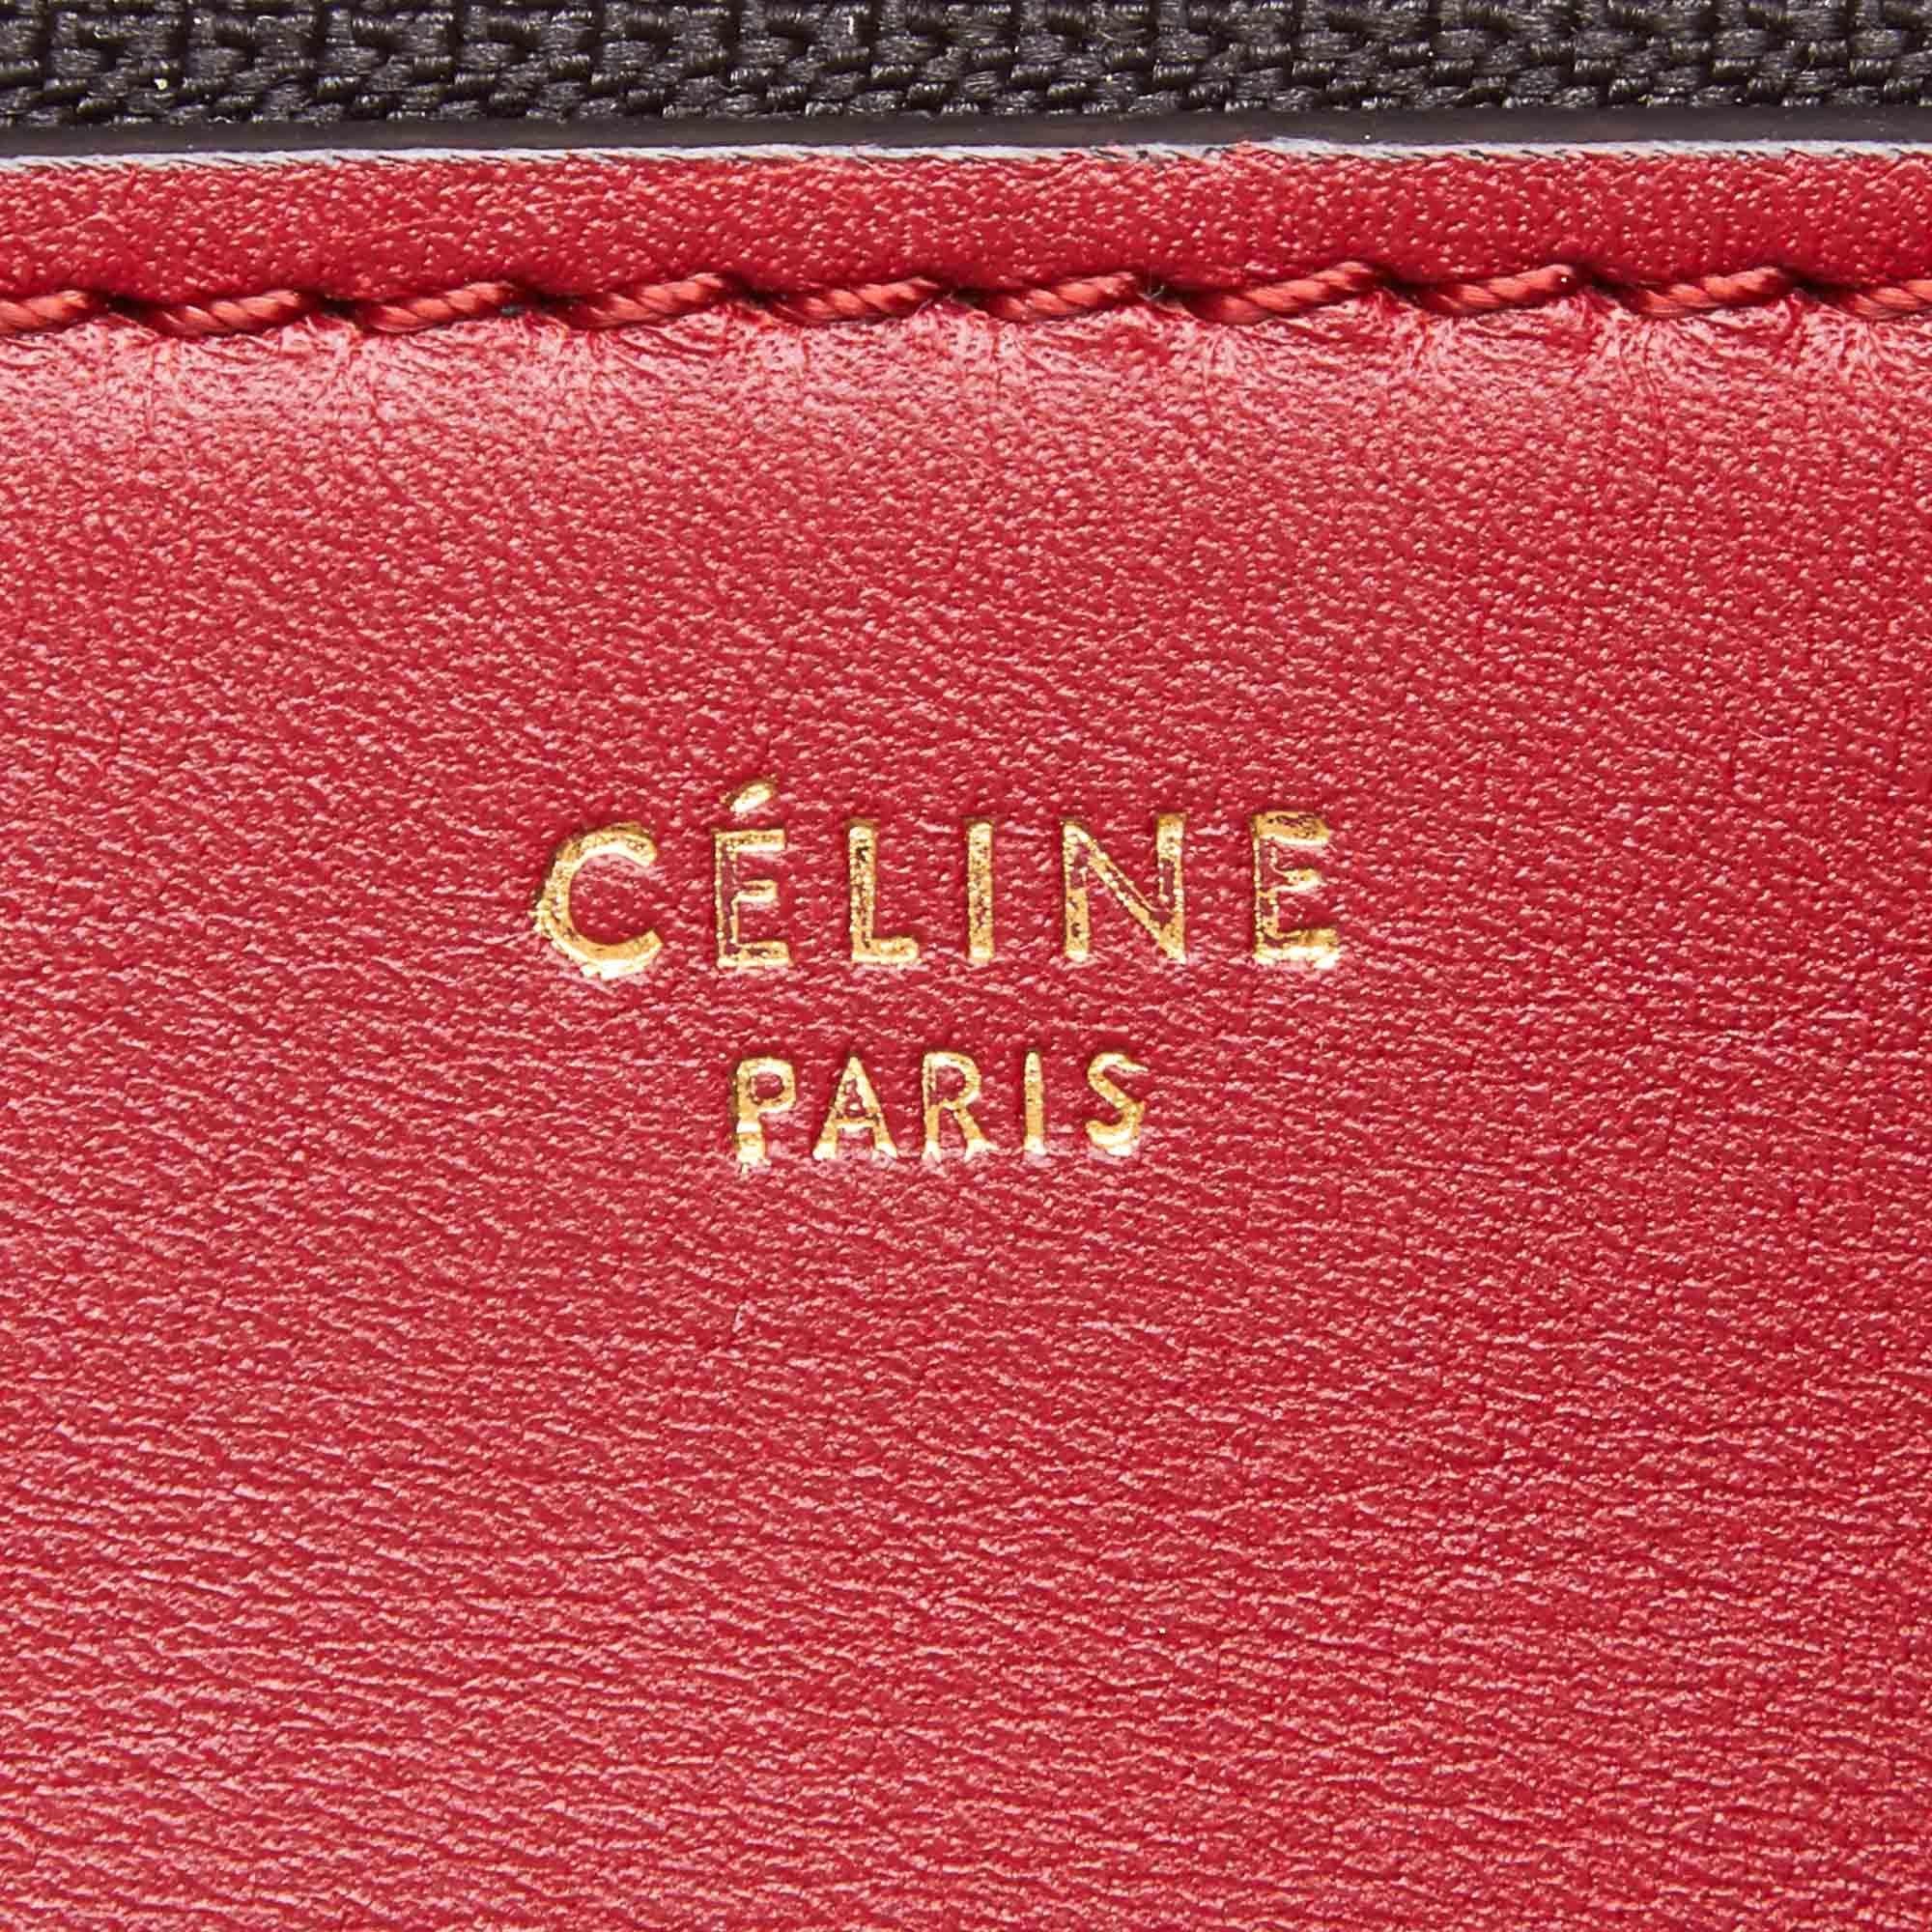 Women's Vintage Authentic Celine Red Leather Large Edge Bag France w Dust Bag LARGE  For Sale